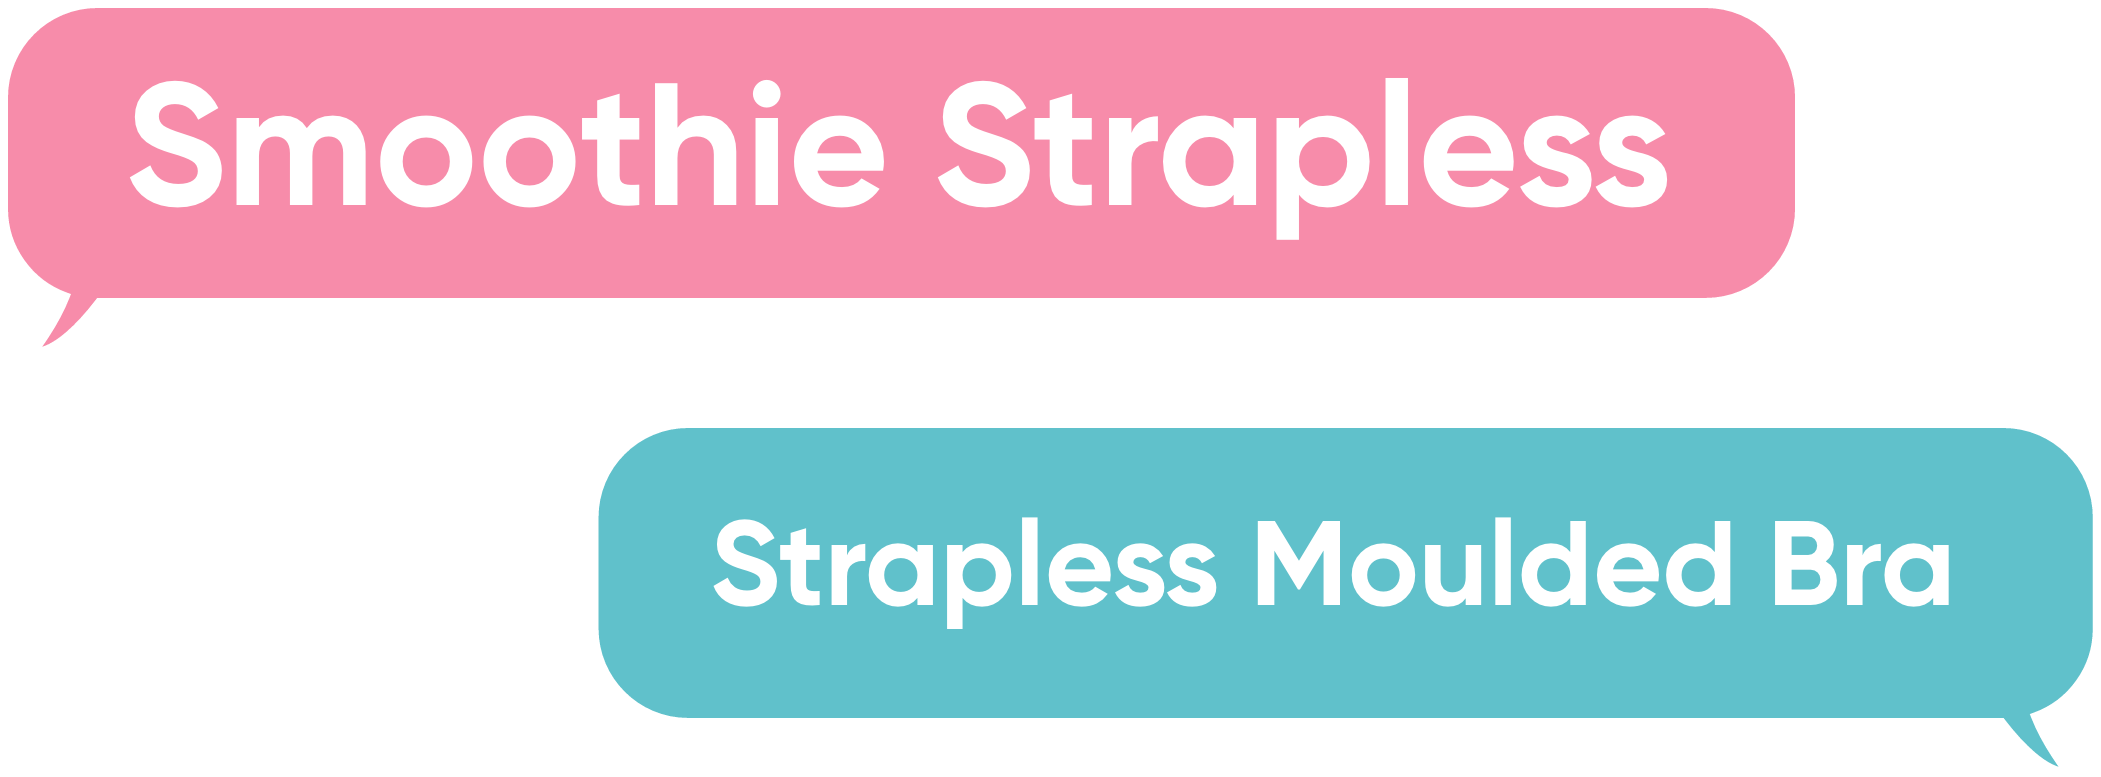 Smoothie Strapless